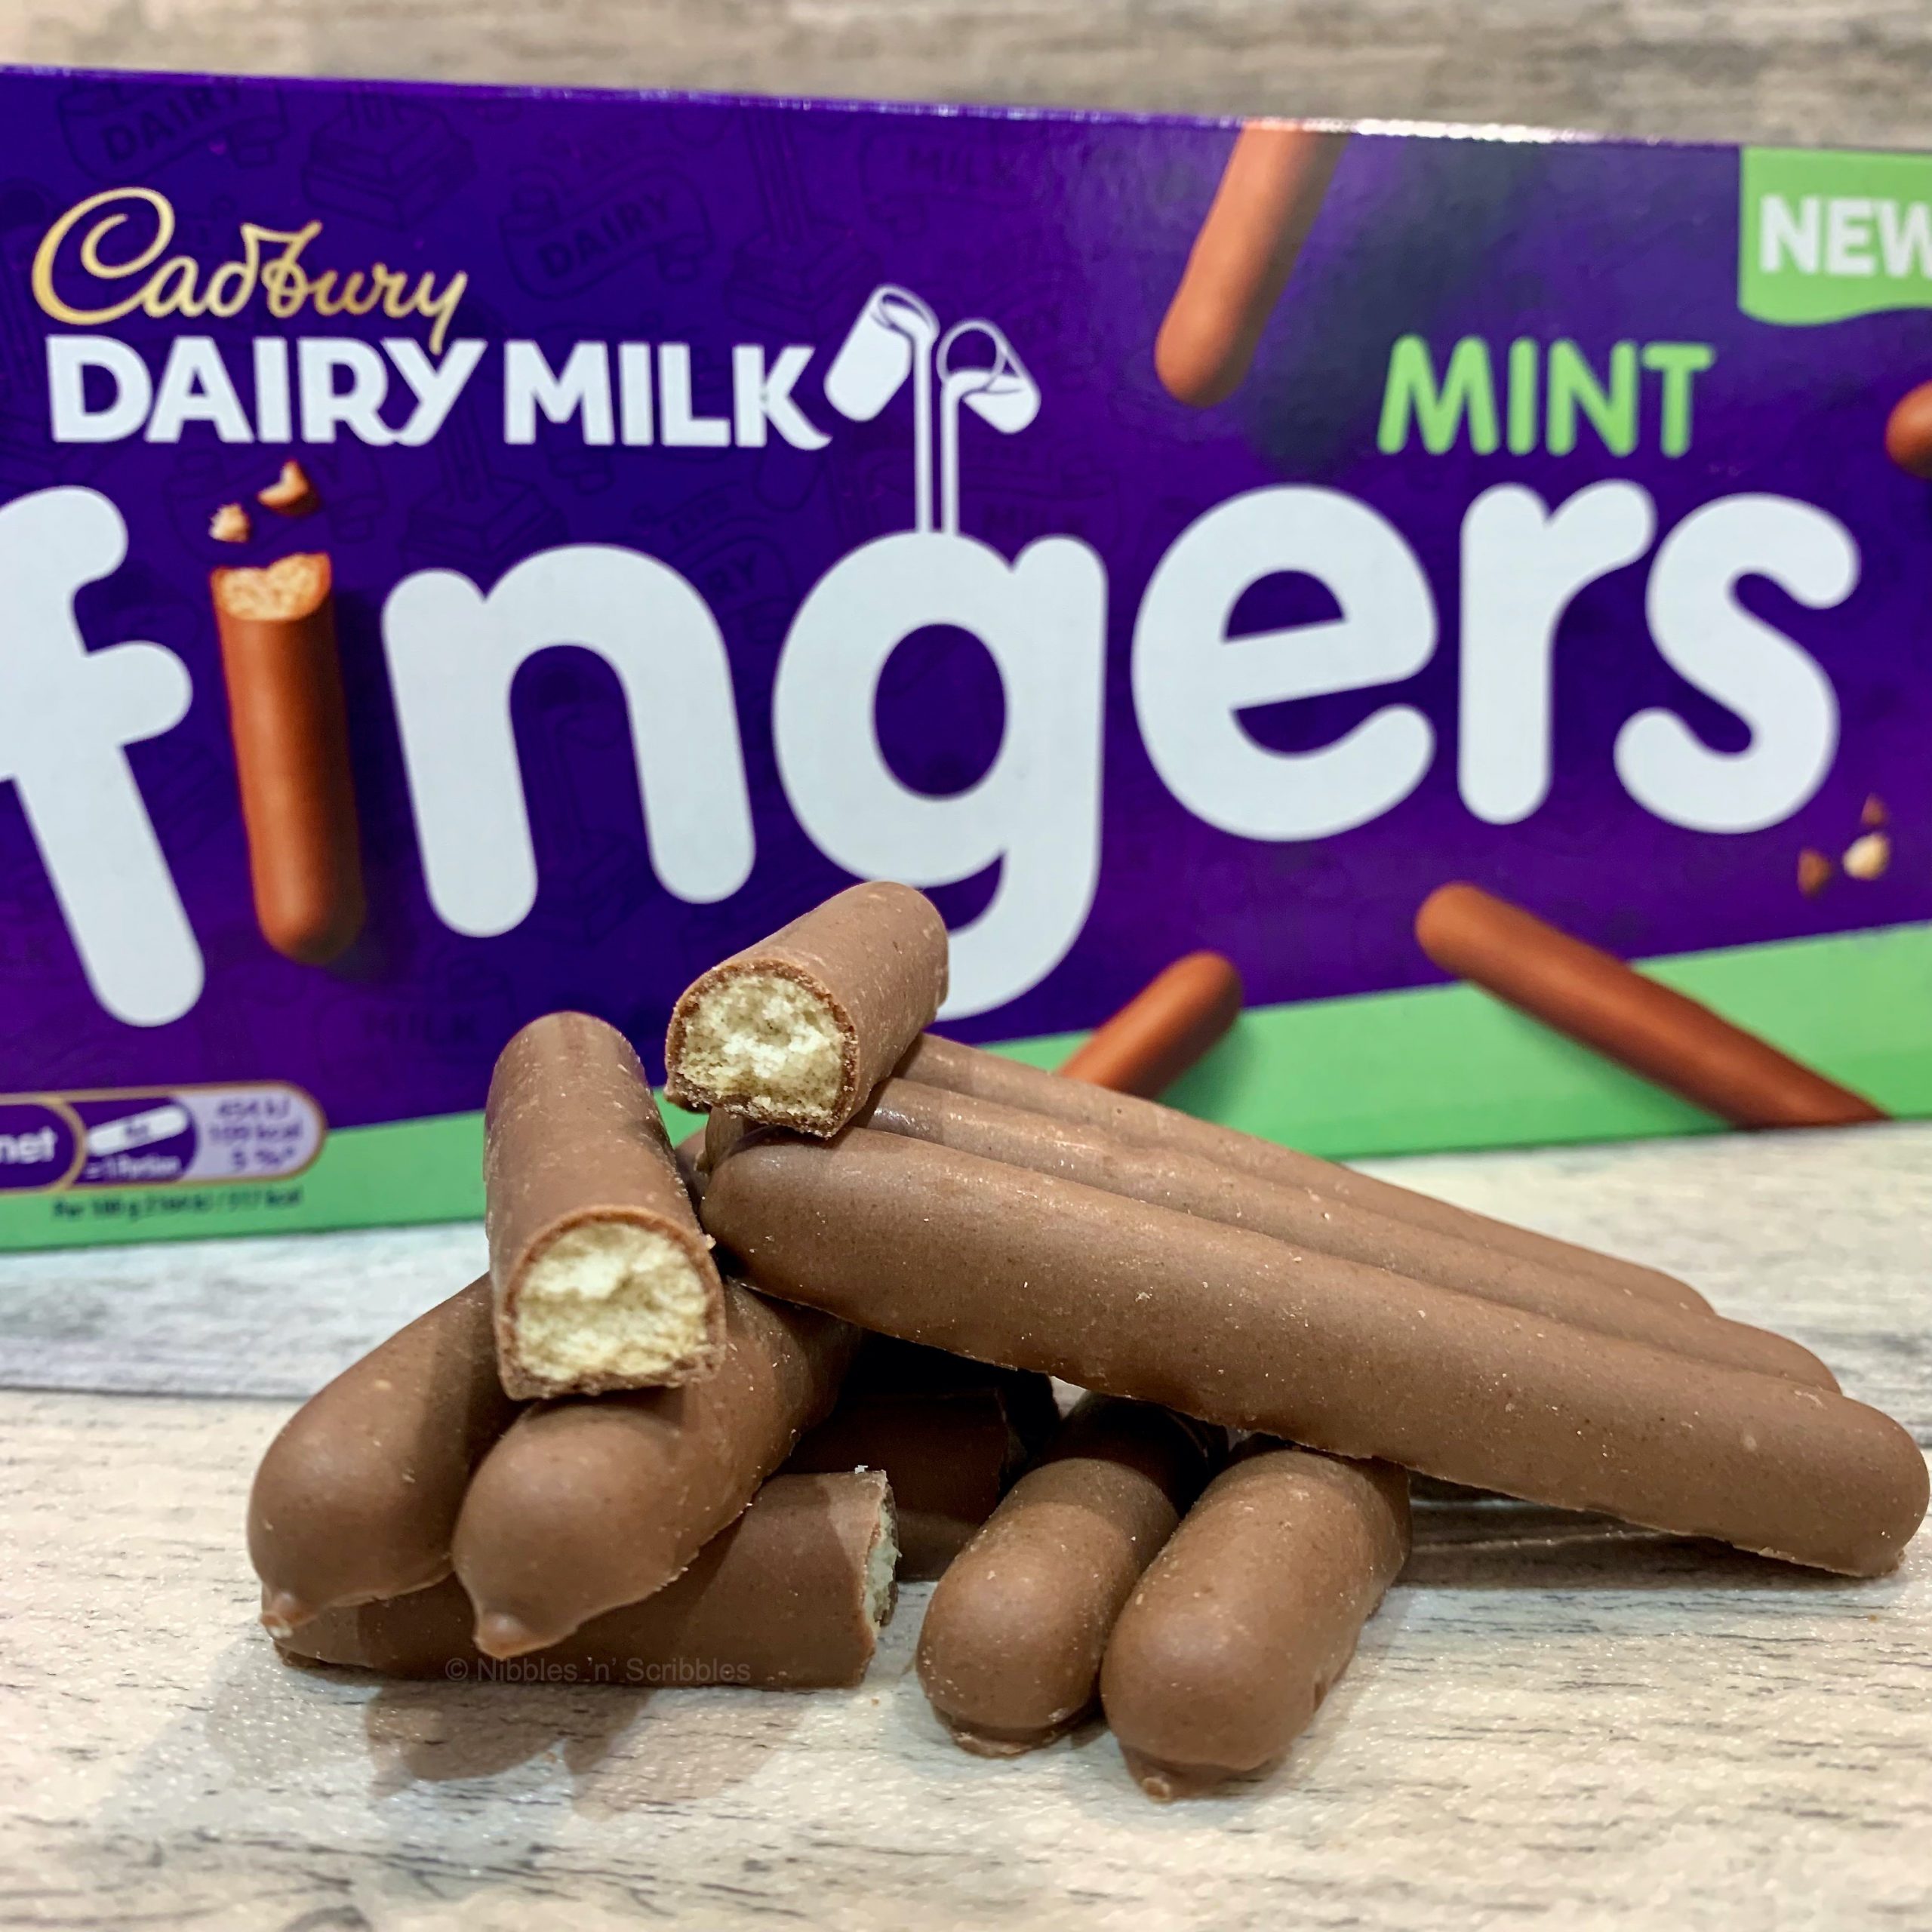 Cadbury Mint Chocolate Fingers